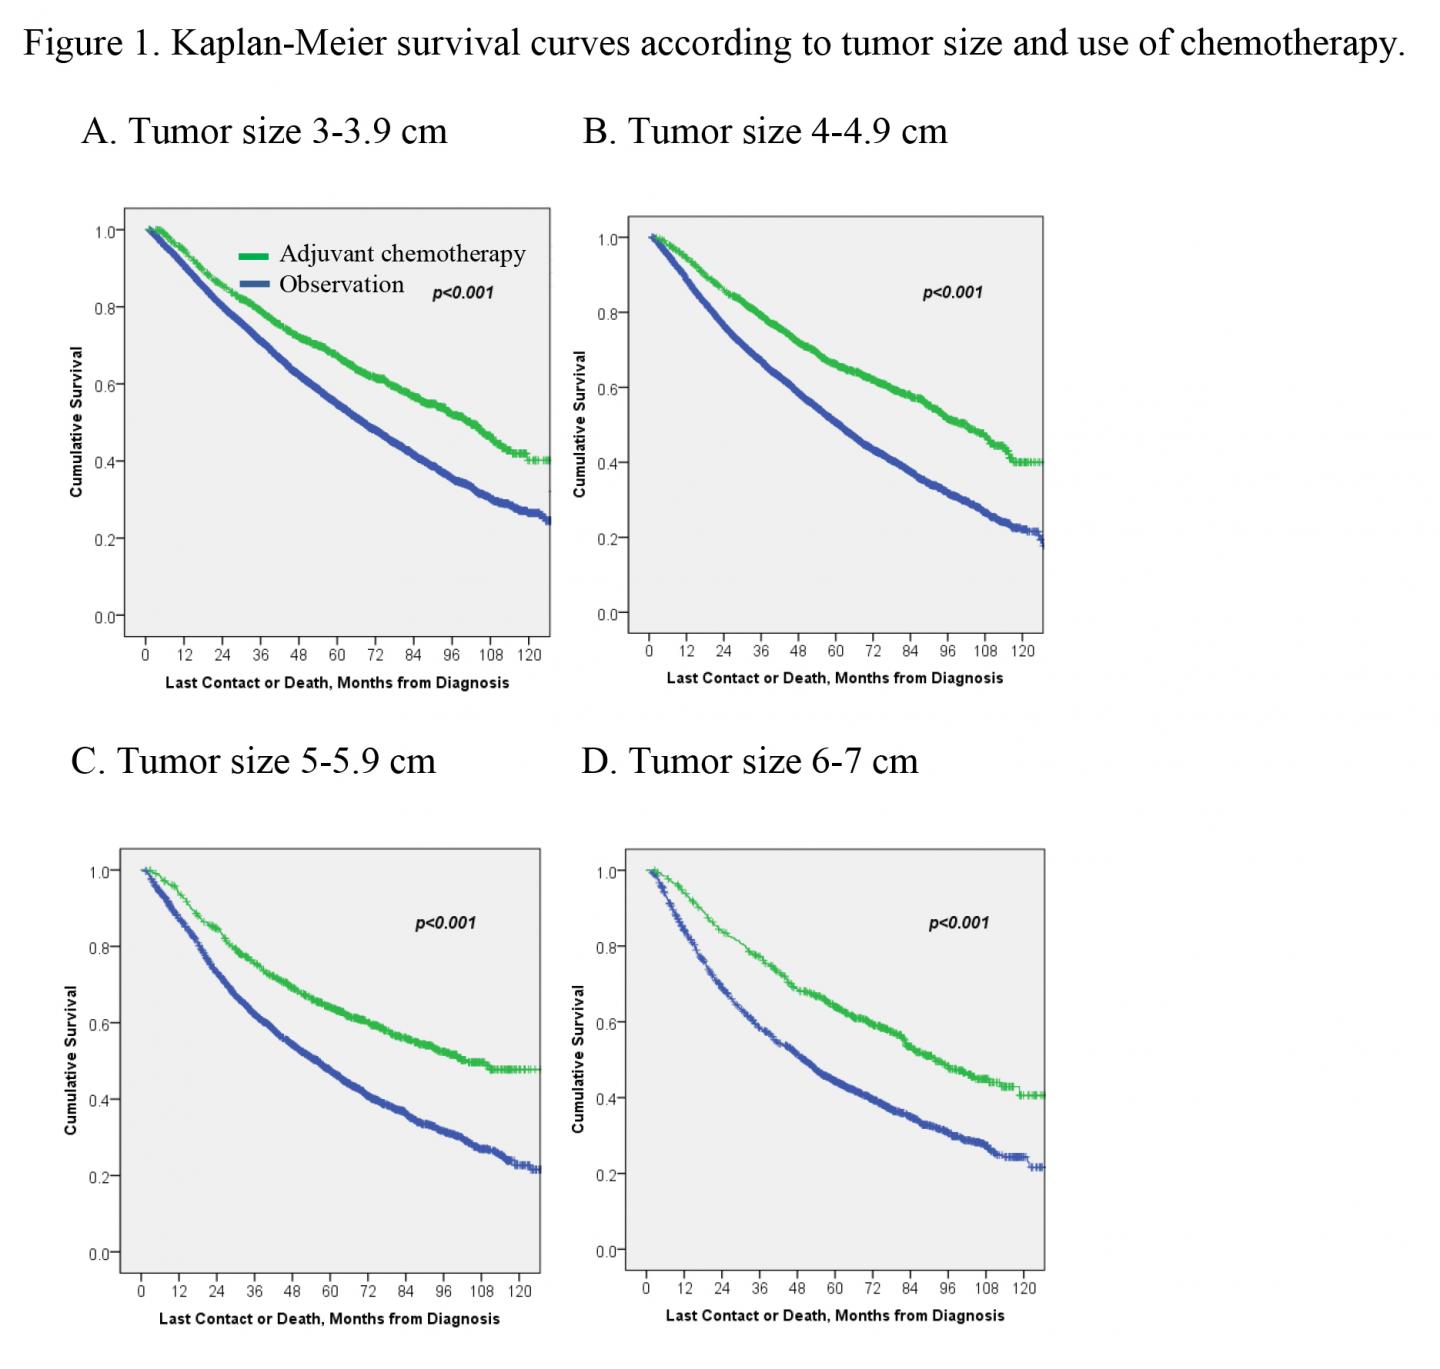 Kaplan-Meier Survival Curves